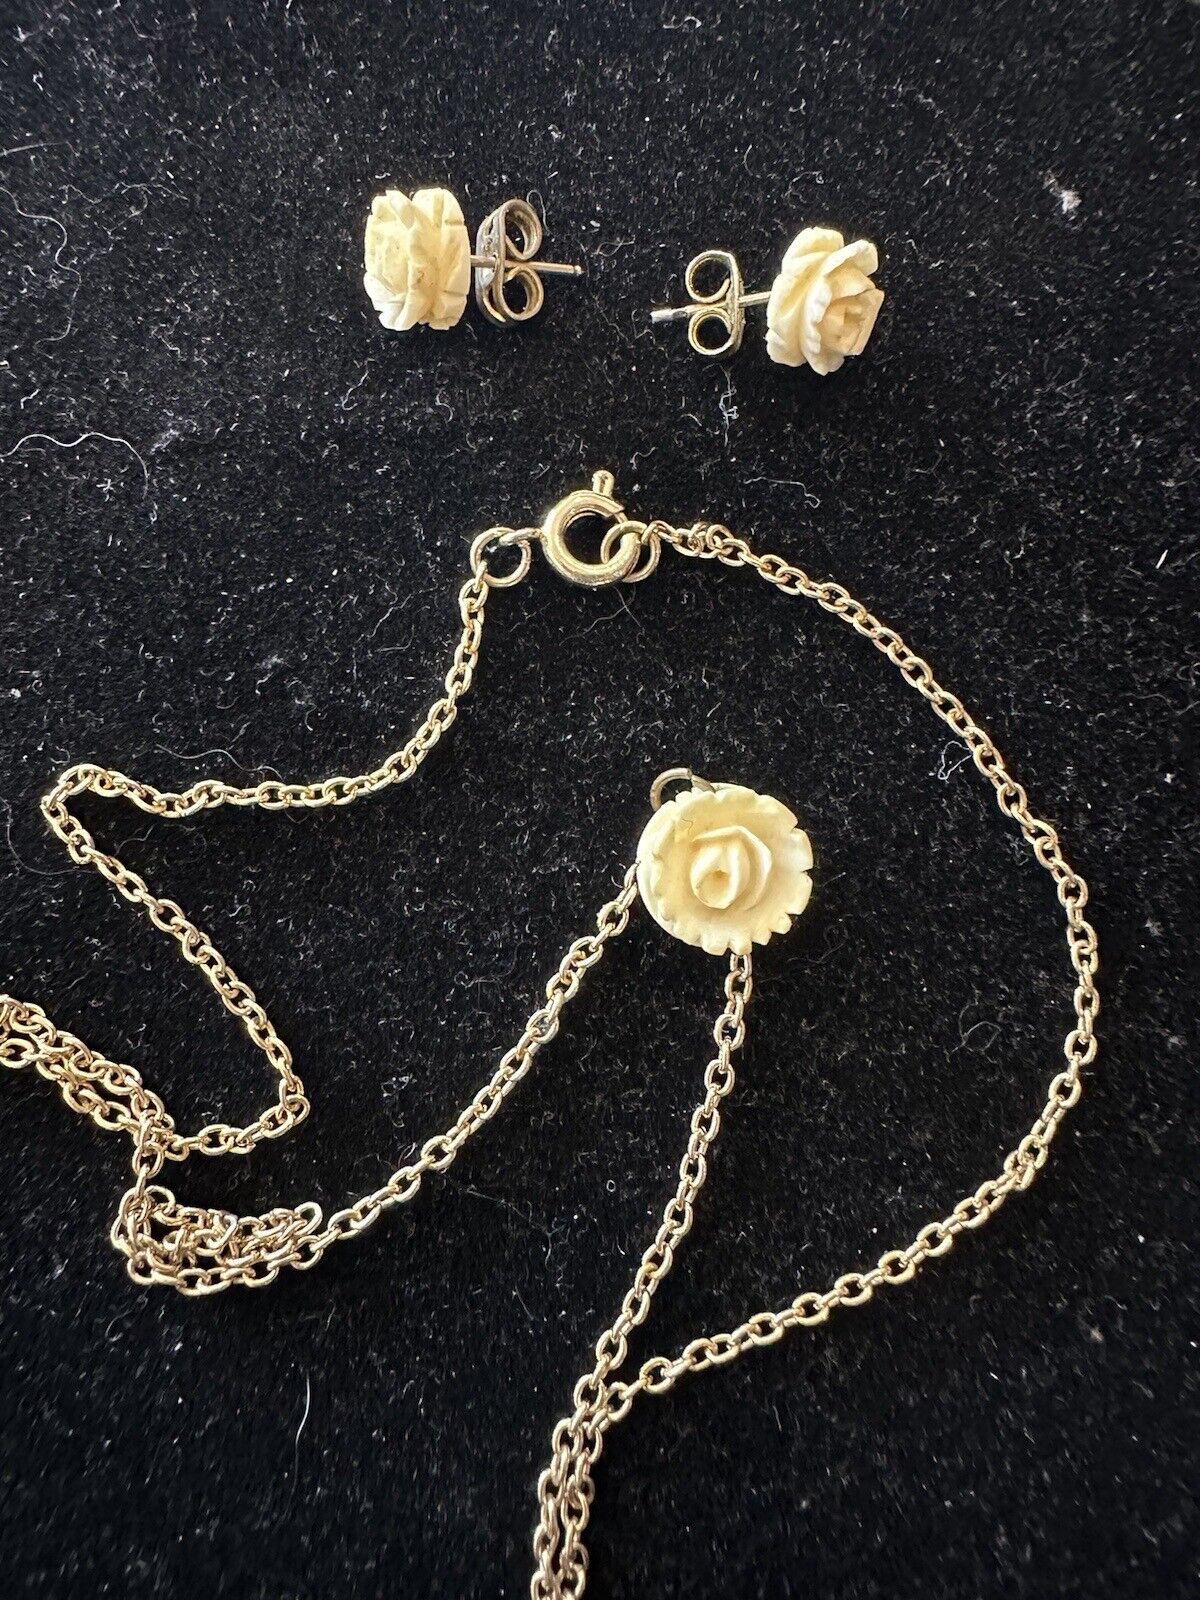 Vintage Estate Carved Rose Necklace & Earrings Set 1970’s Cream Color